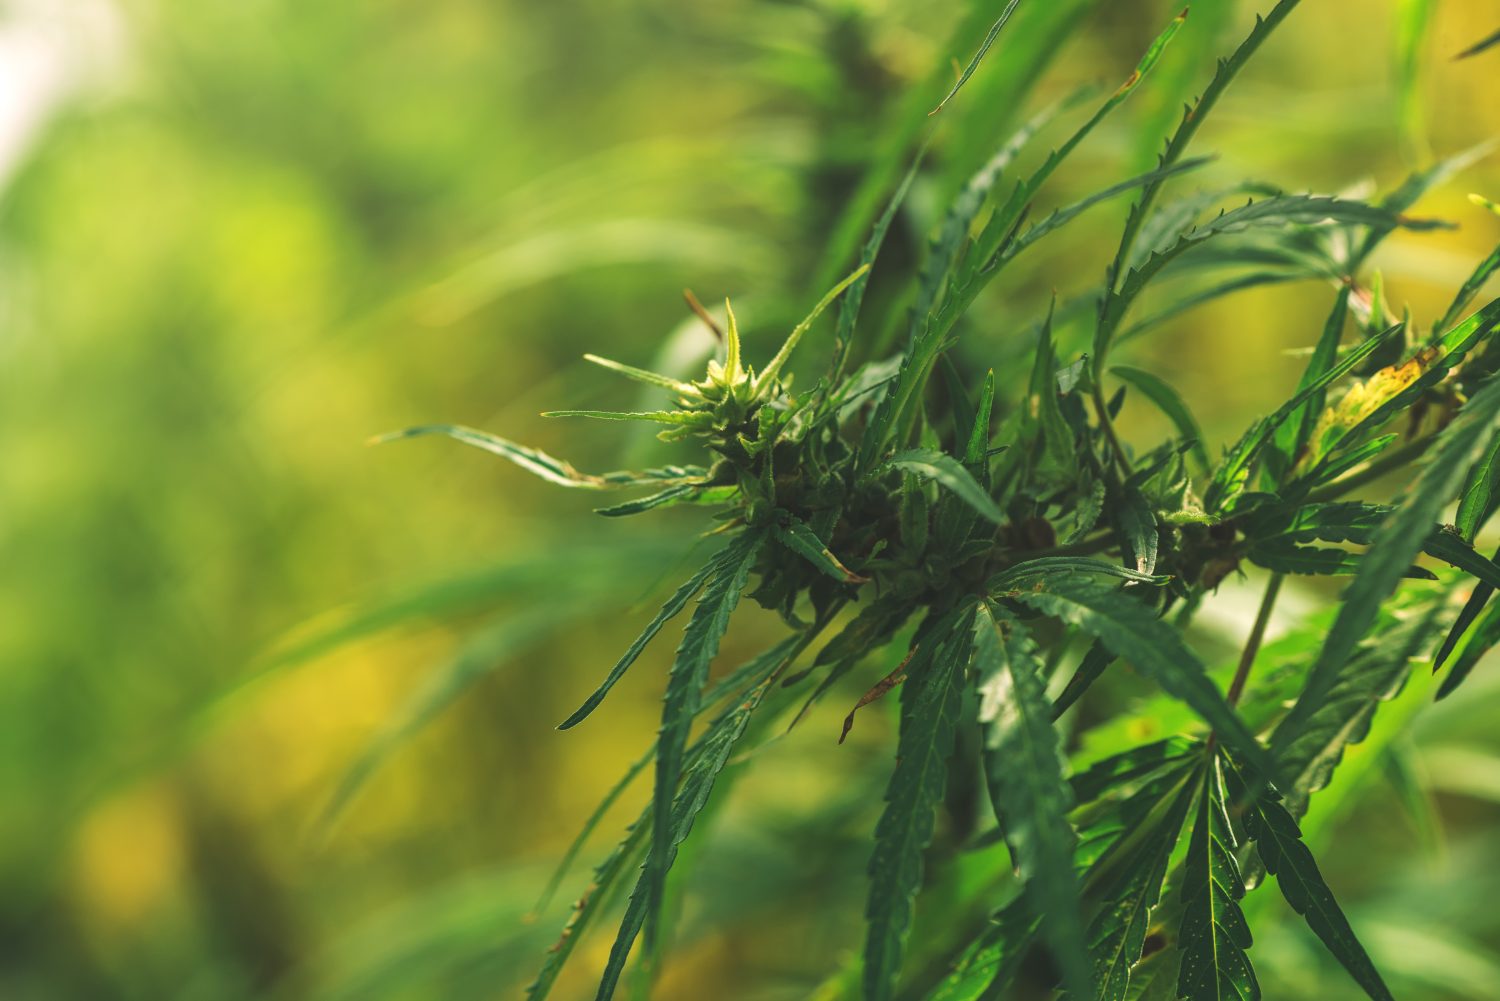 ultivated hemp in field, industrial marijuana growth